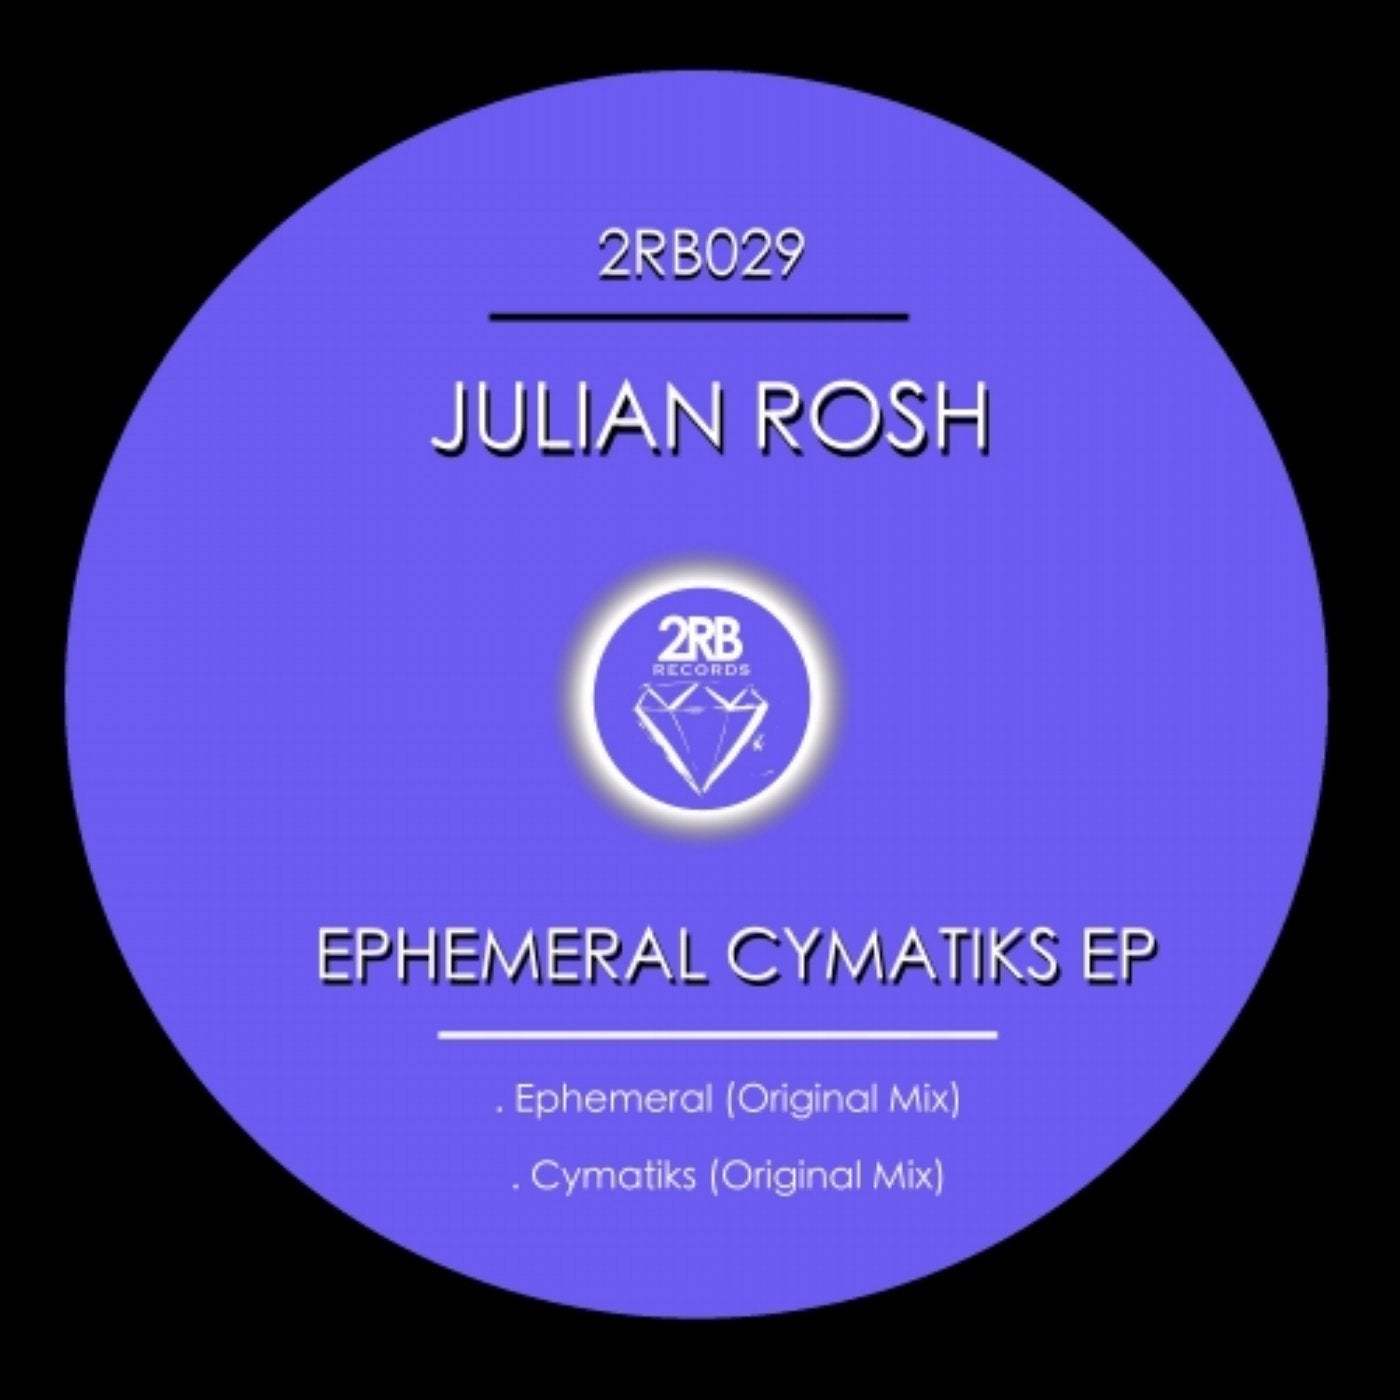 Ephemeral Cymatiks EP